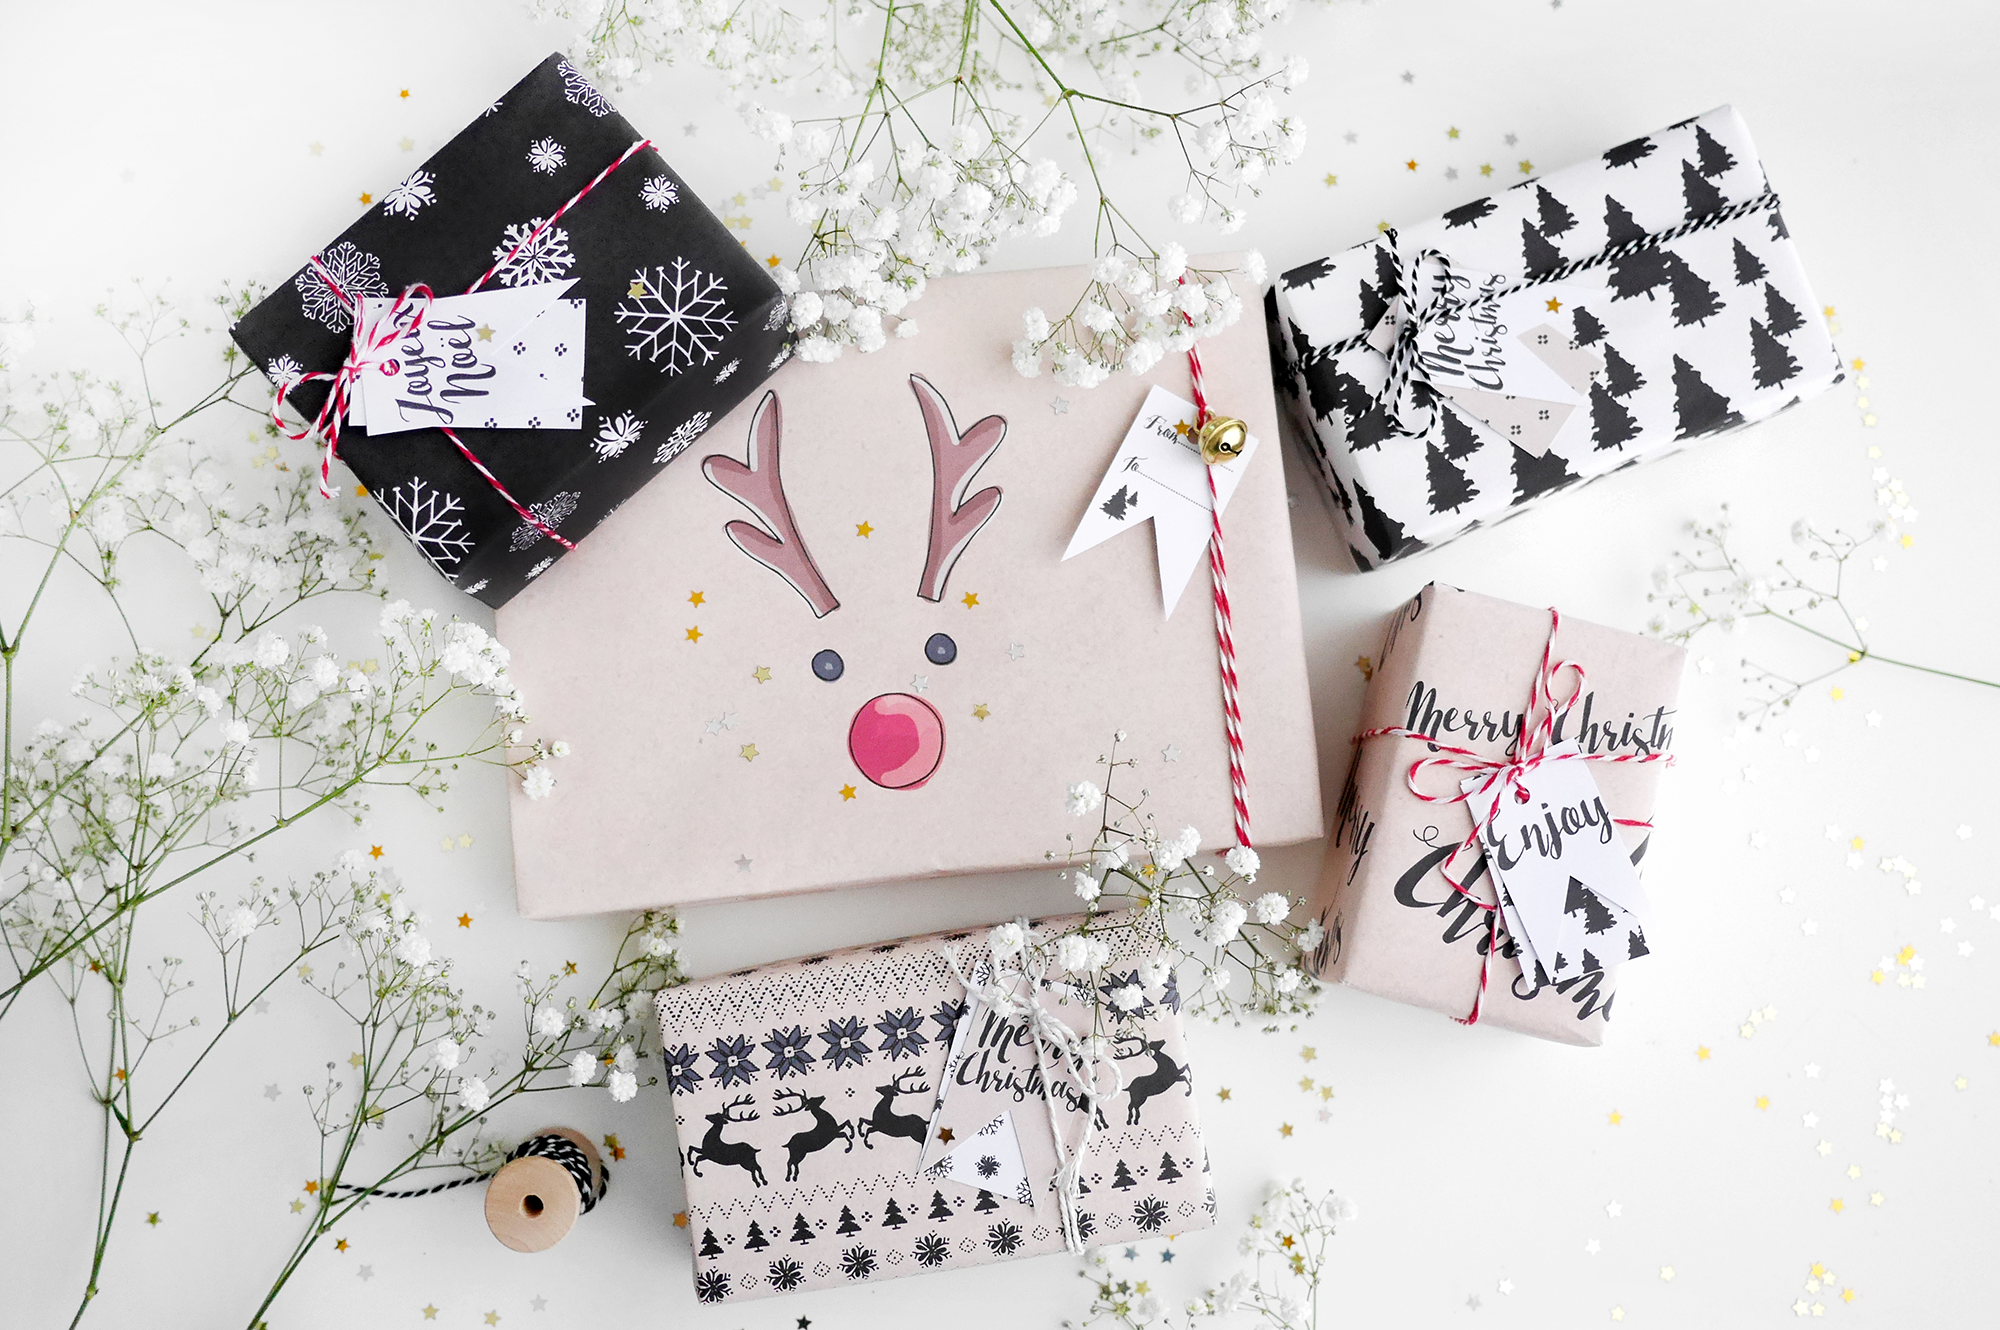 Kerstmis 2016 cadeauverpakking en labels